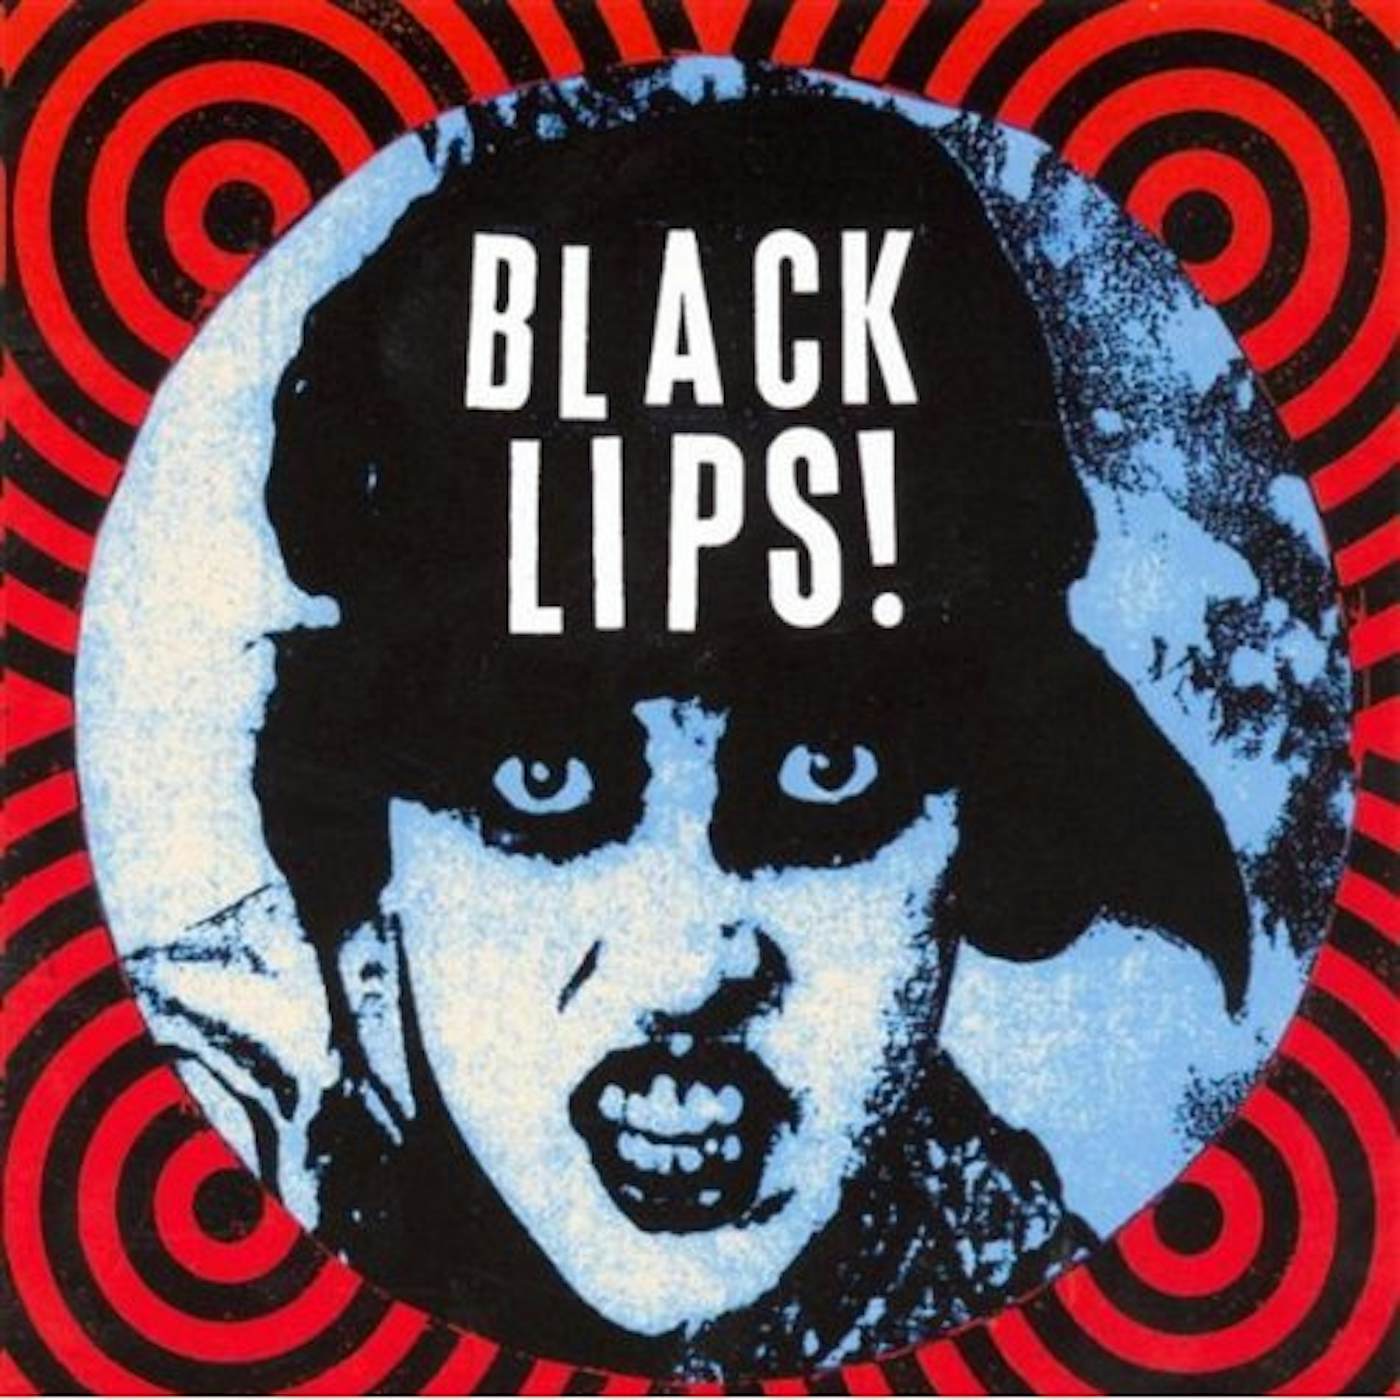 BLACK LIPS CD